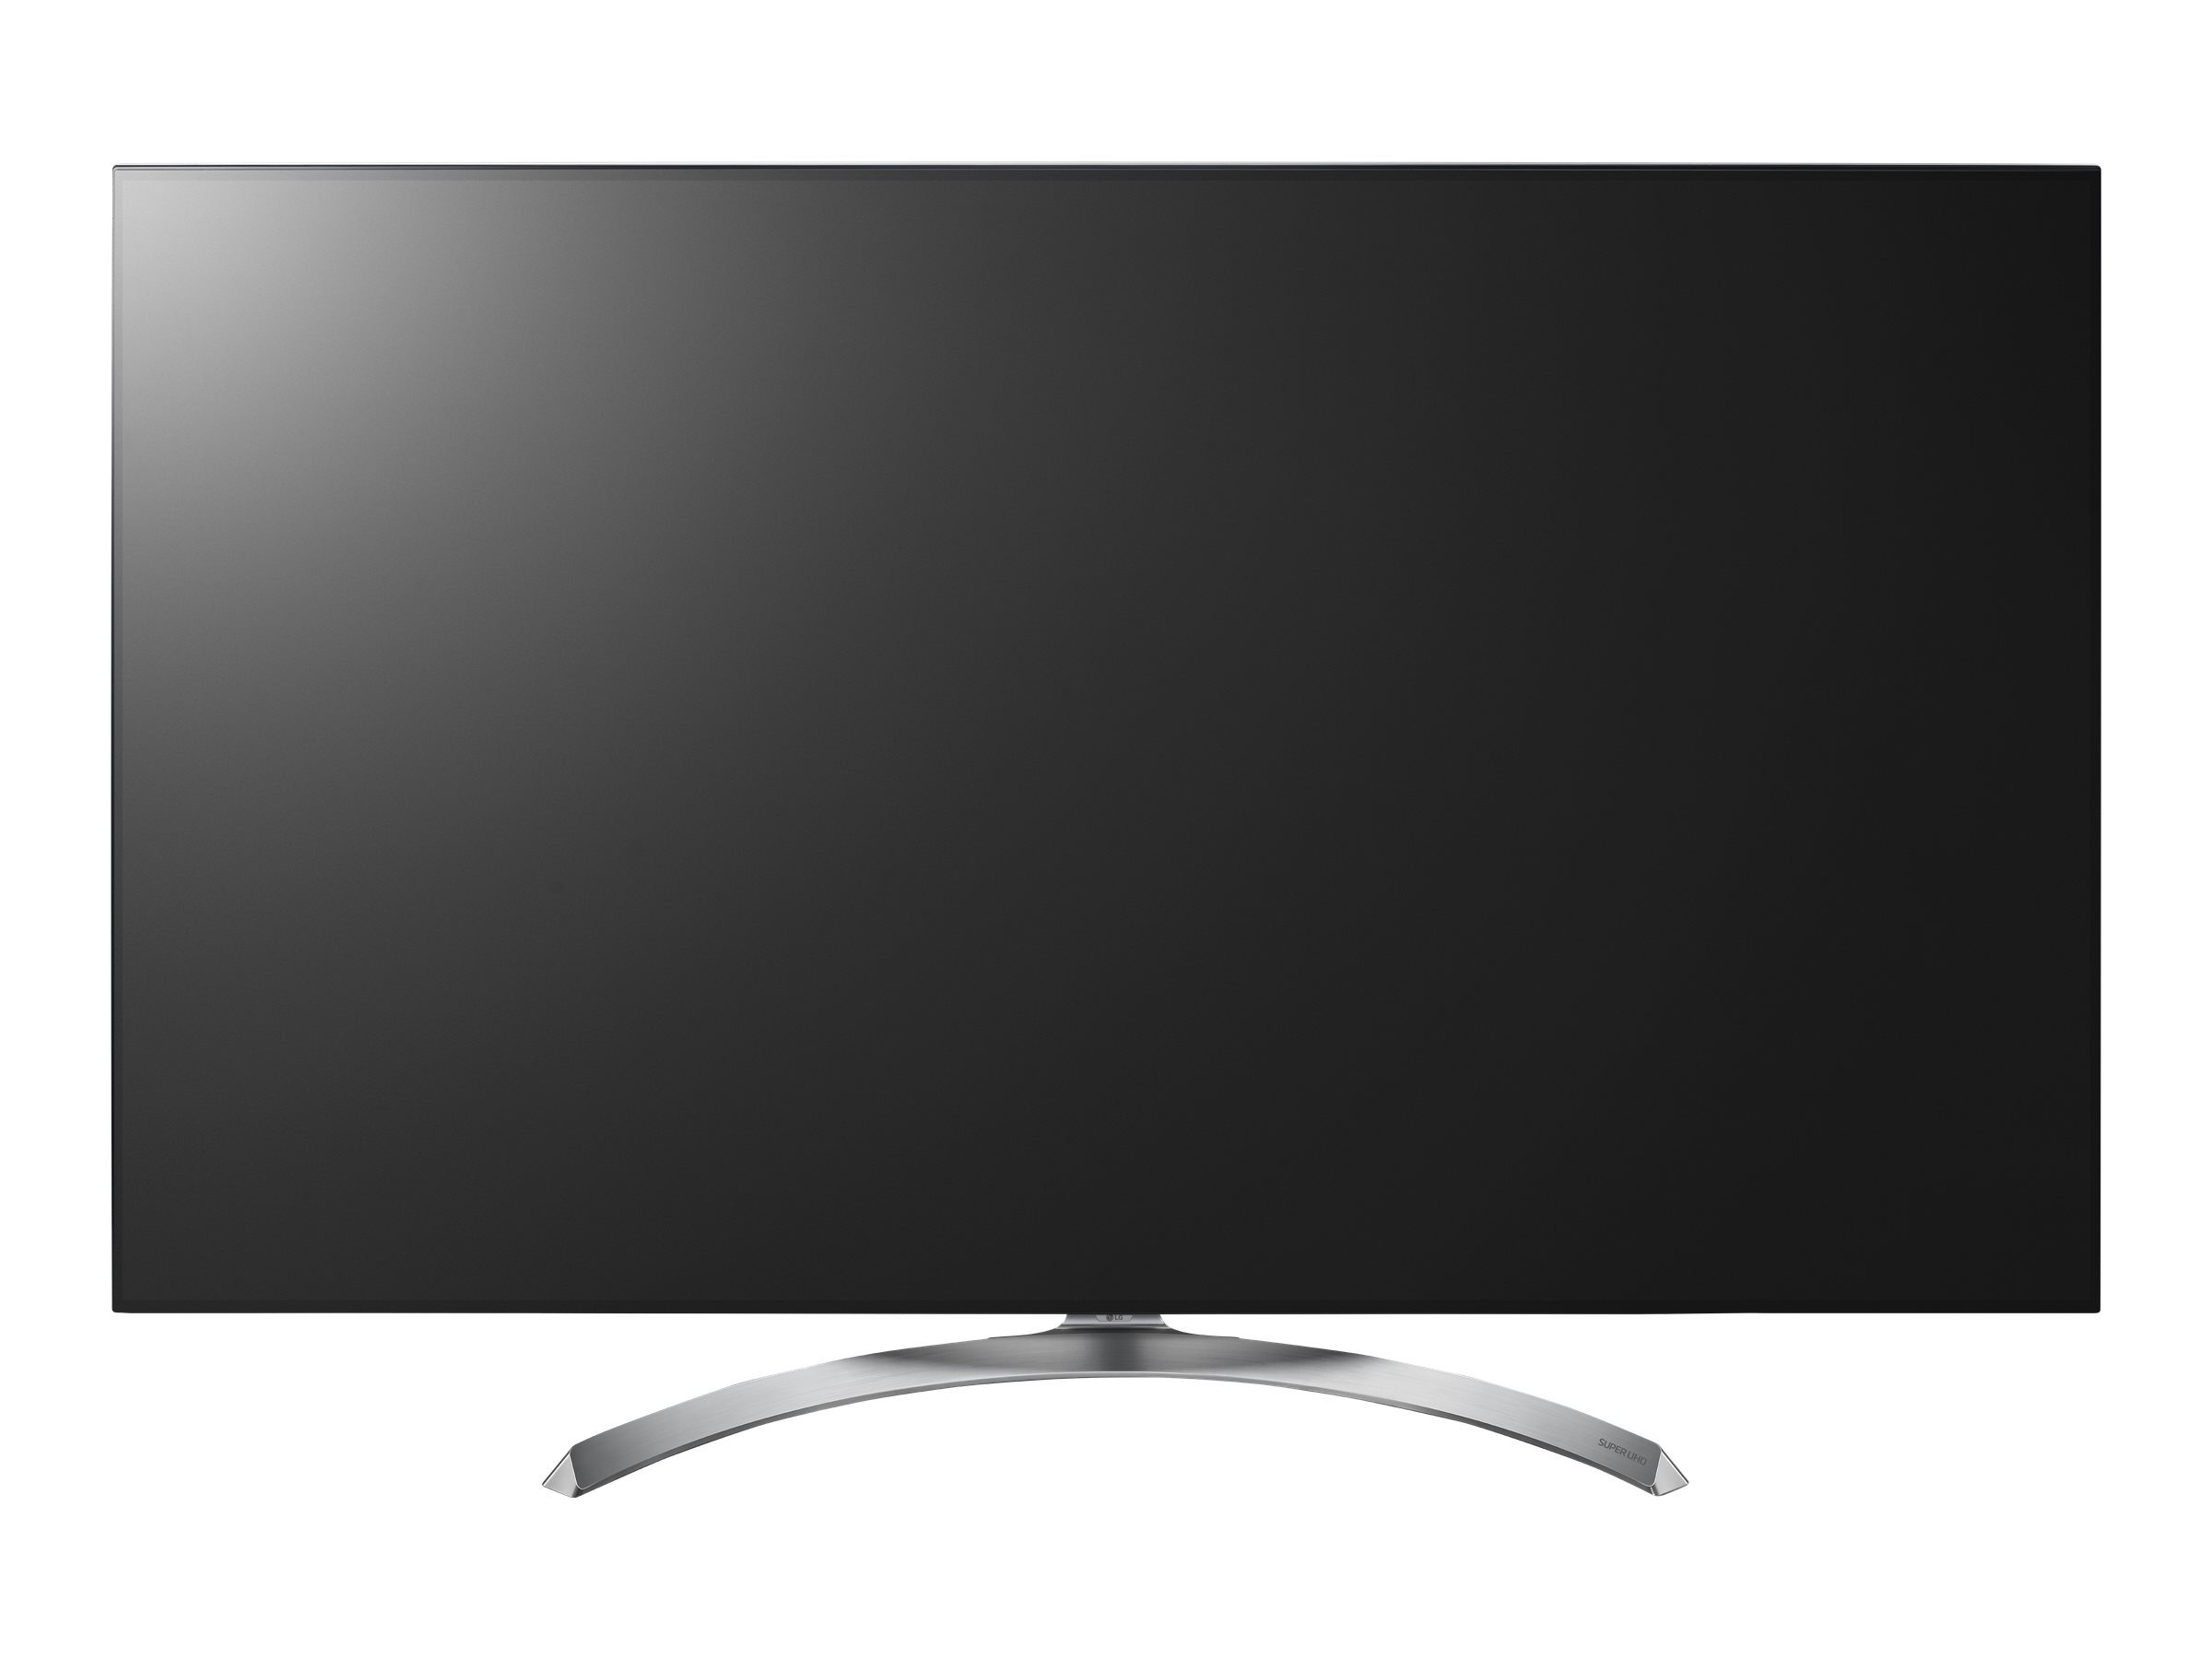 LG 55SJ8500 - 55" Diagonal Class (54.6" viewable) - SJ8500 Series LED-backlit LCD TV - Smart TV - webOS - 4K UHD (2160p) 3840 x 2160 - HDR - Nano Cell Display - image 1 of 10